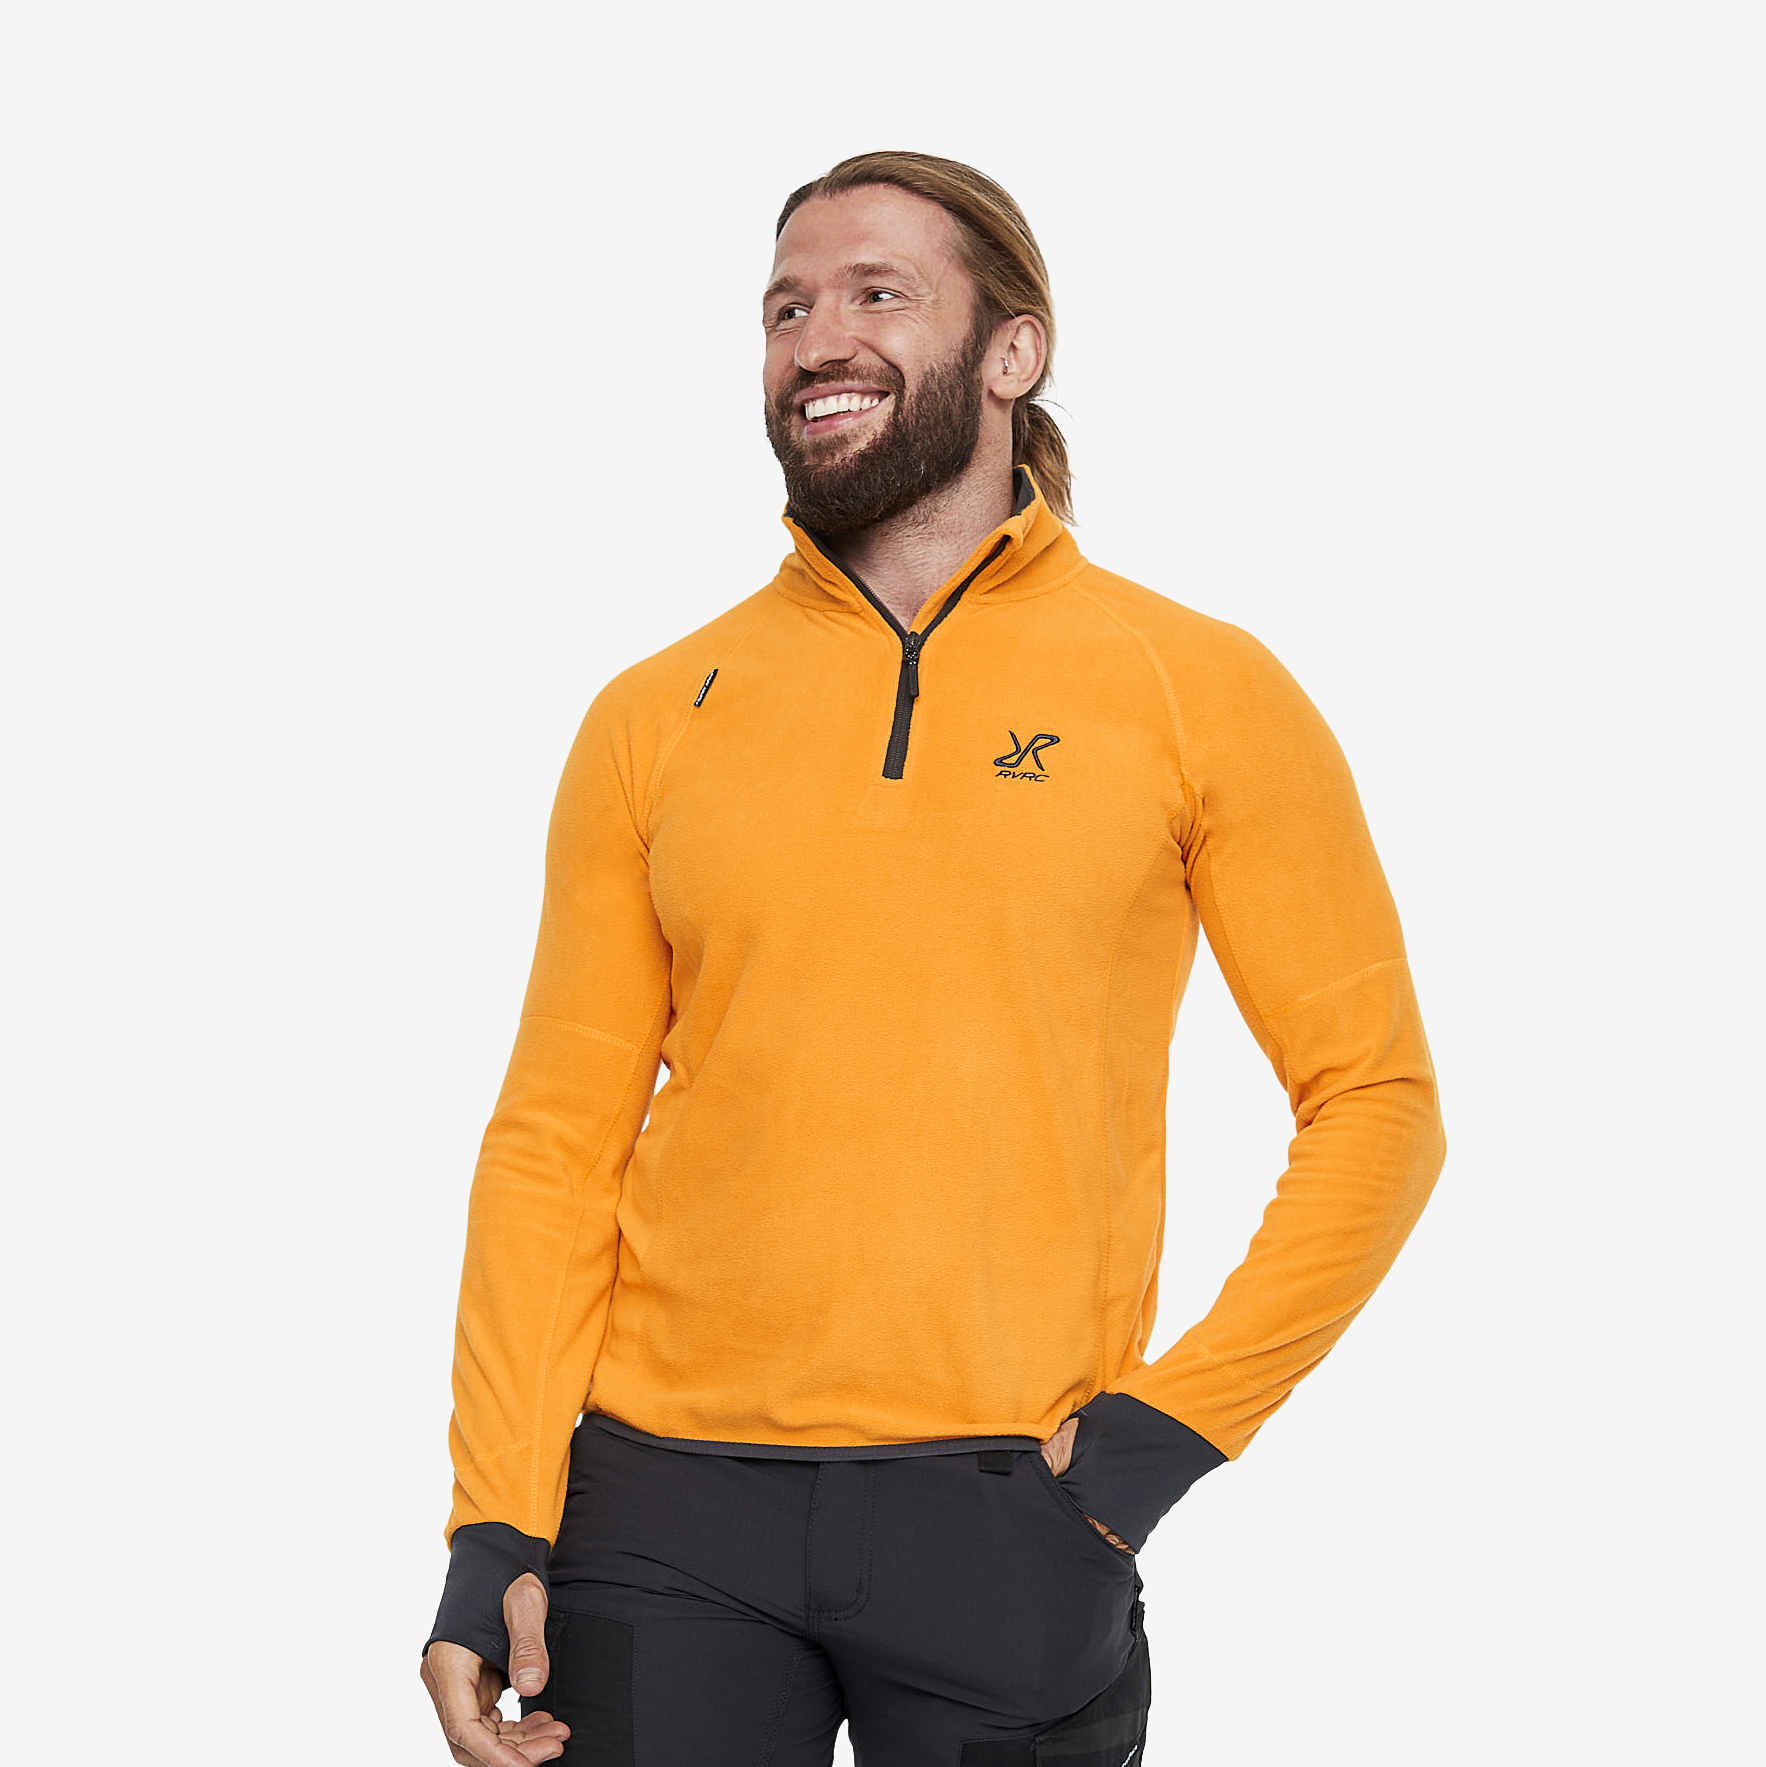 Trekker Fleece - Herr - Radiant Yellow, Storlek:2XL - Herr > Tröjor > Fleece